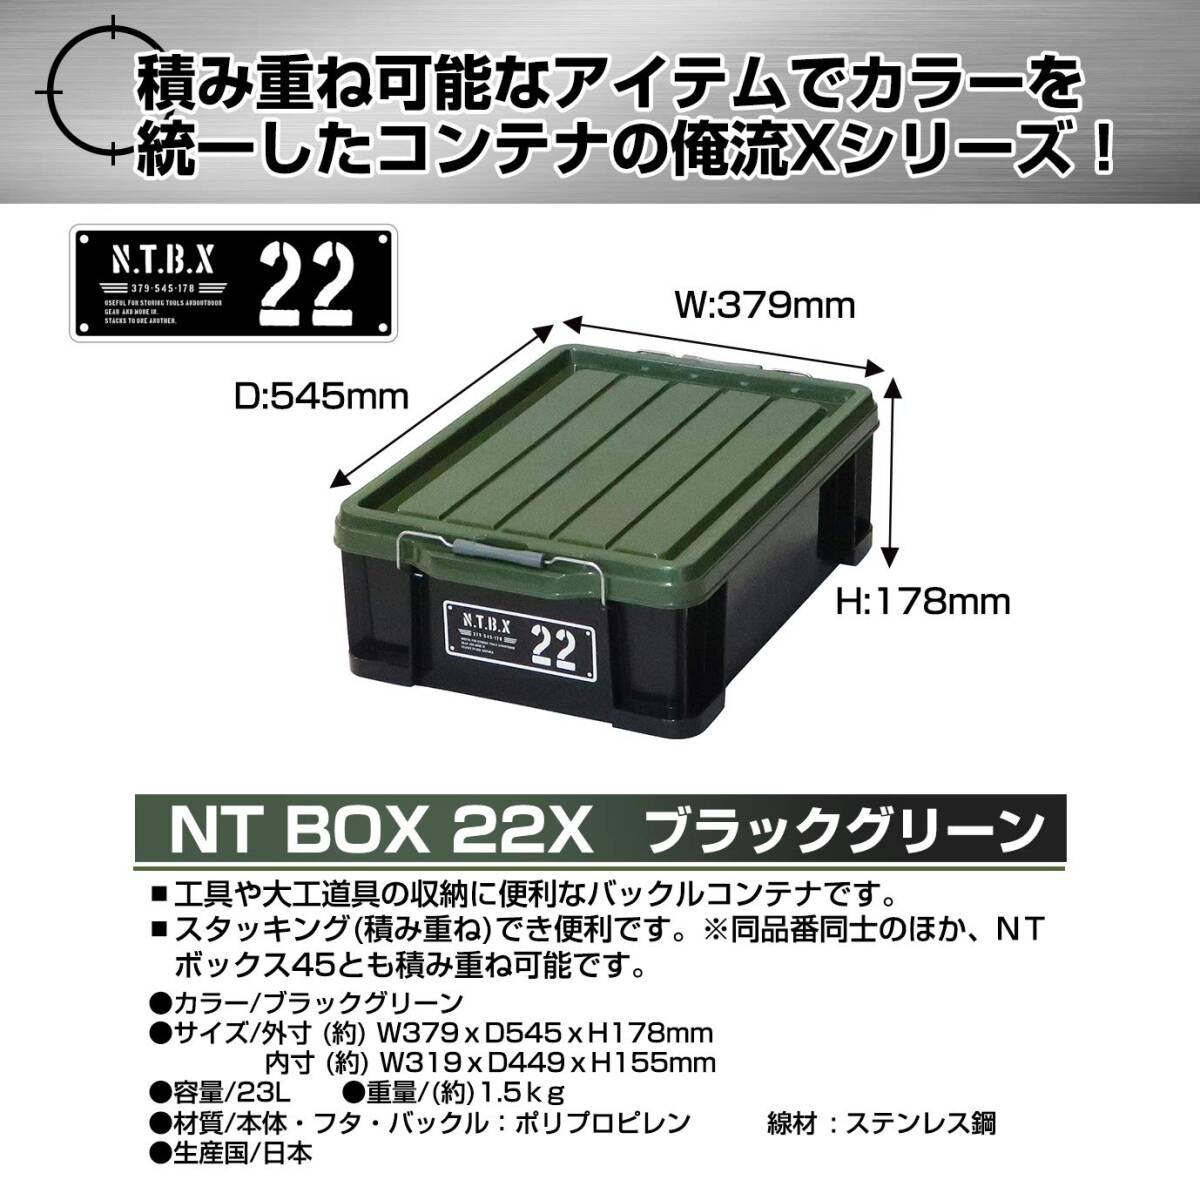 JEJアステージ 収納ボックス [Xシリーズ NTボックス #22] ブラックグリーン 幅38×奥行54.5×高さ18cm 日本製 積み重ね_画像2